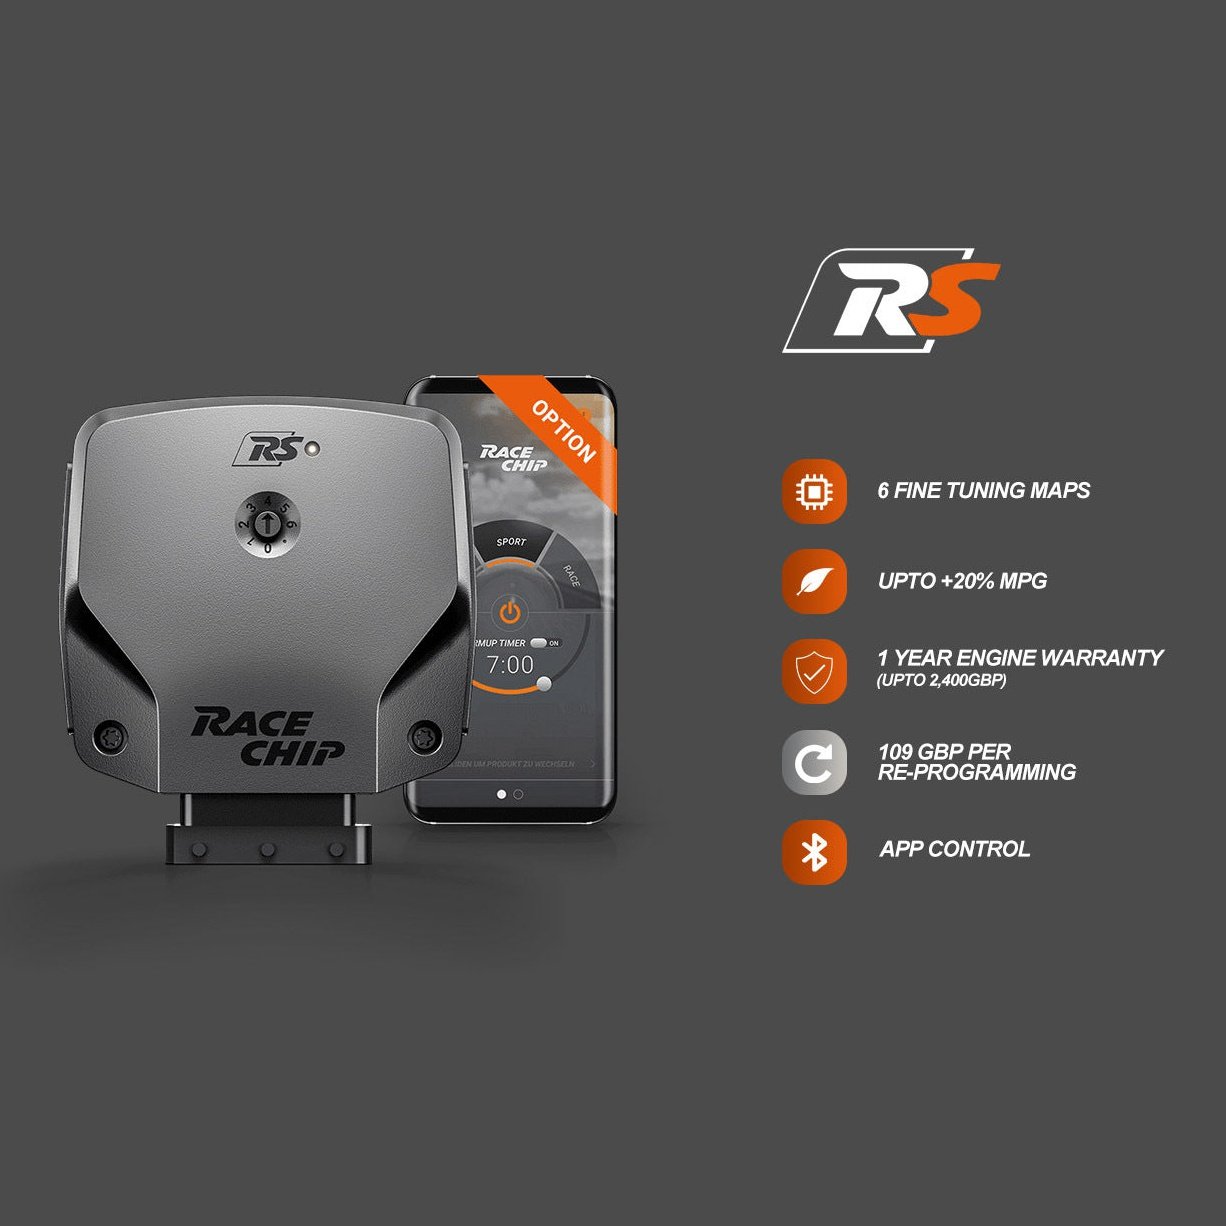 RaceChip RS ignite performance